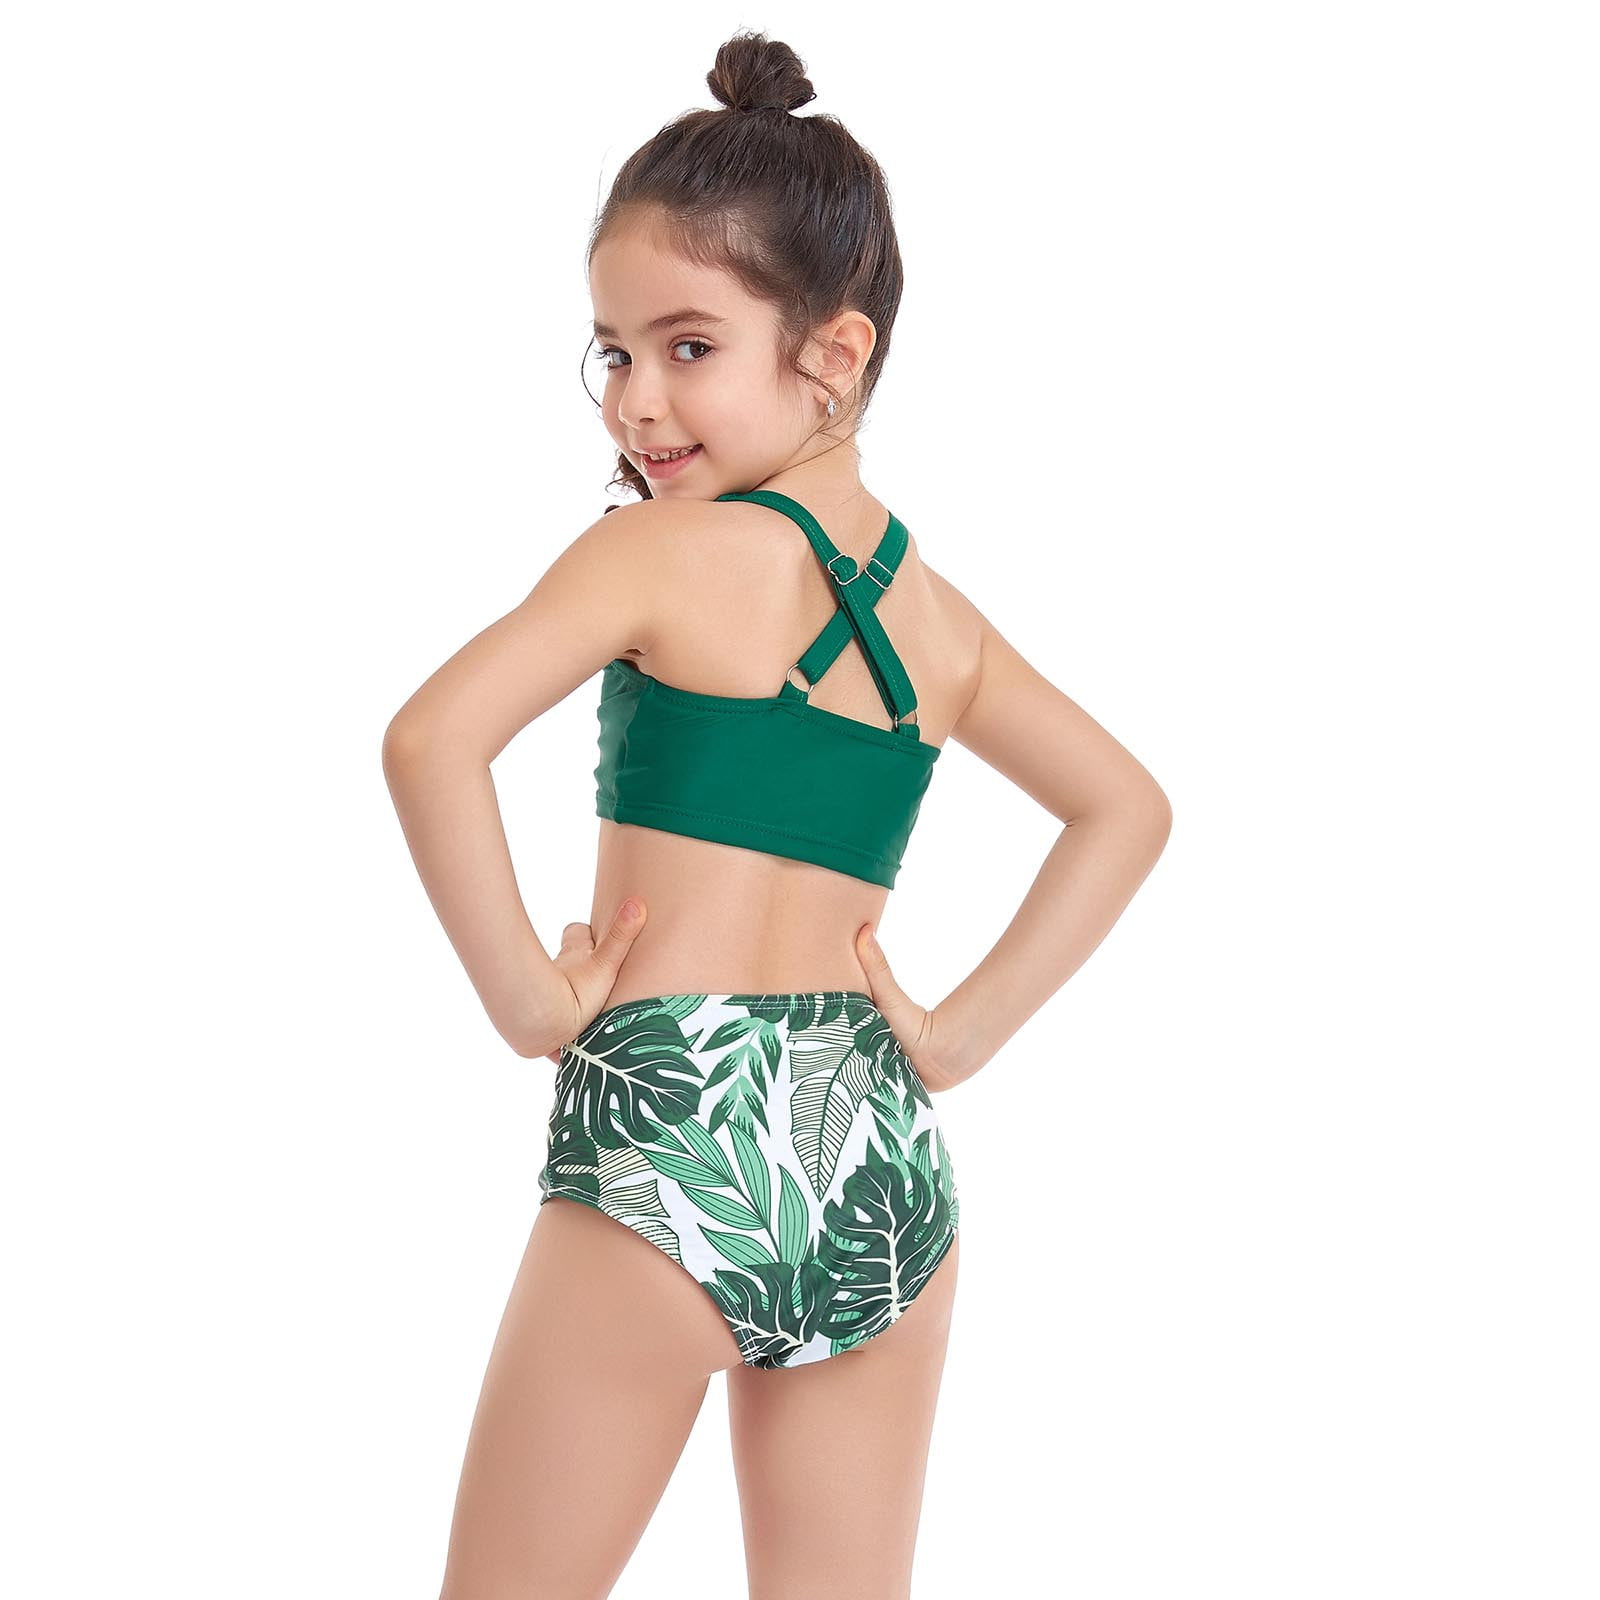 Aoksee Girls Holiday Cute Solid Bikini Set Two Piece Swimsuit Bathing Suit Swimwear Gifts for Kids Green, Kids Unisex, Size: 140